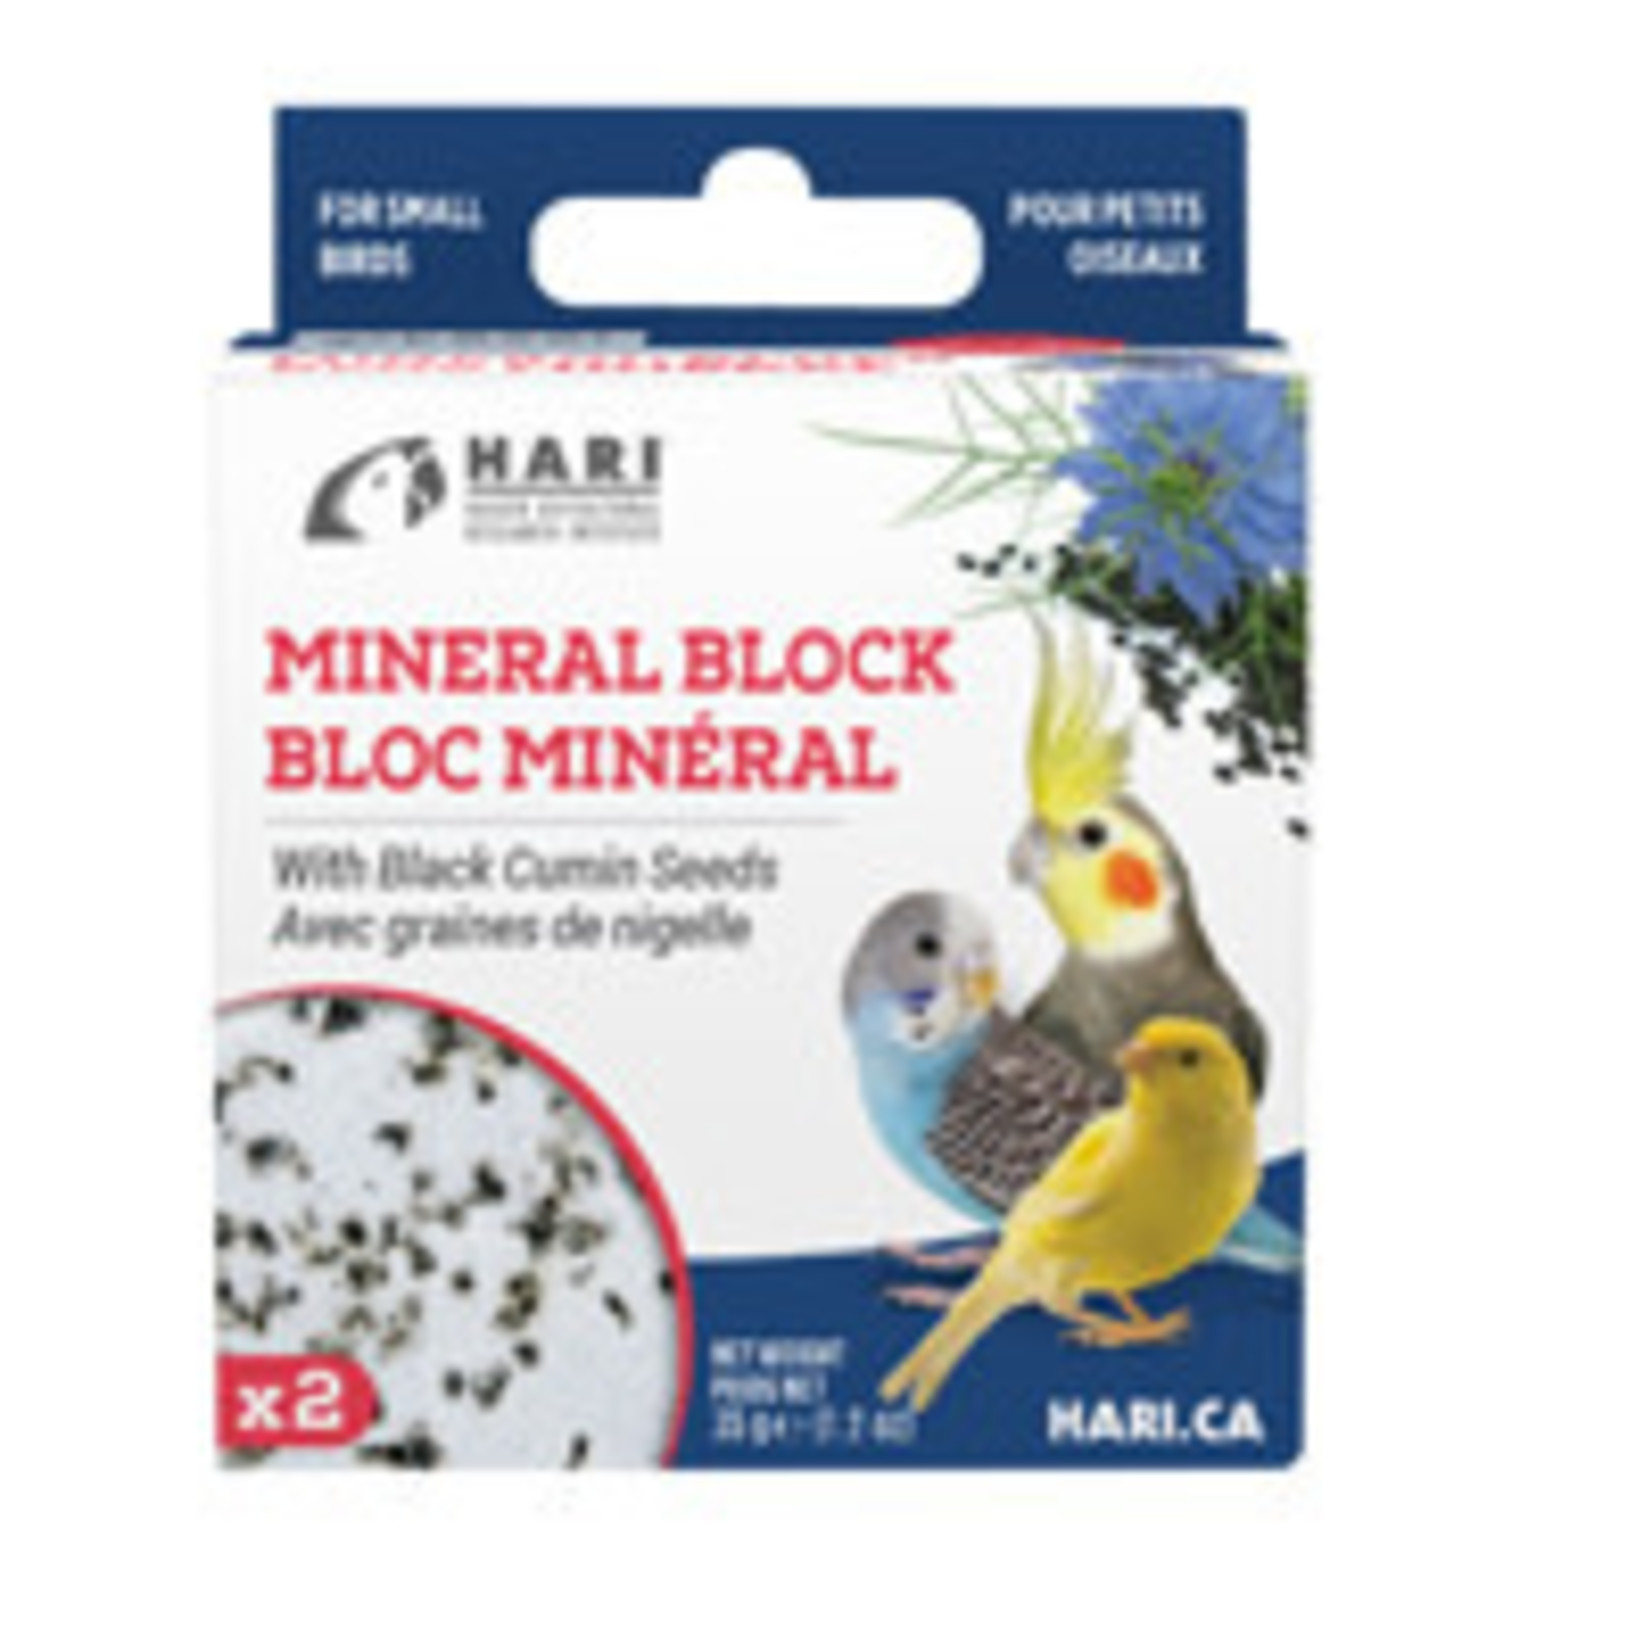 HARI HARI Mineral Block, Black Cumin Seeds, 1.2 oz